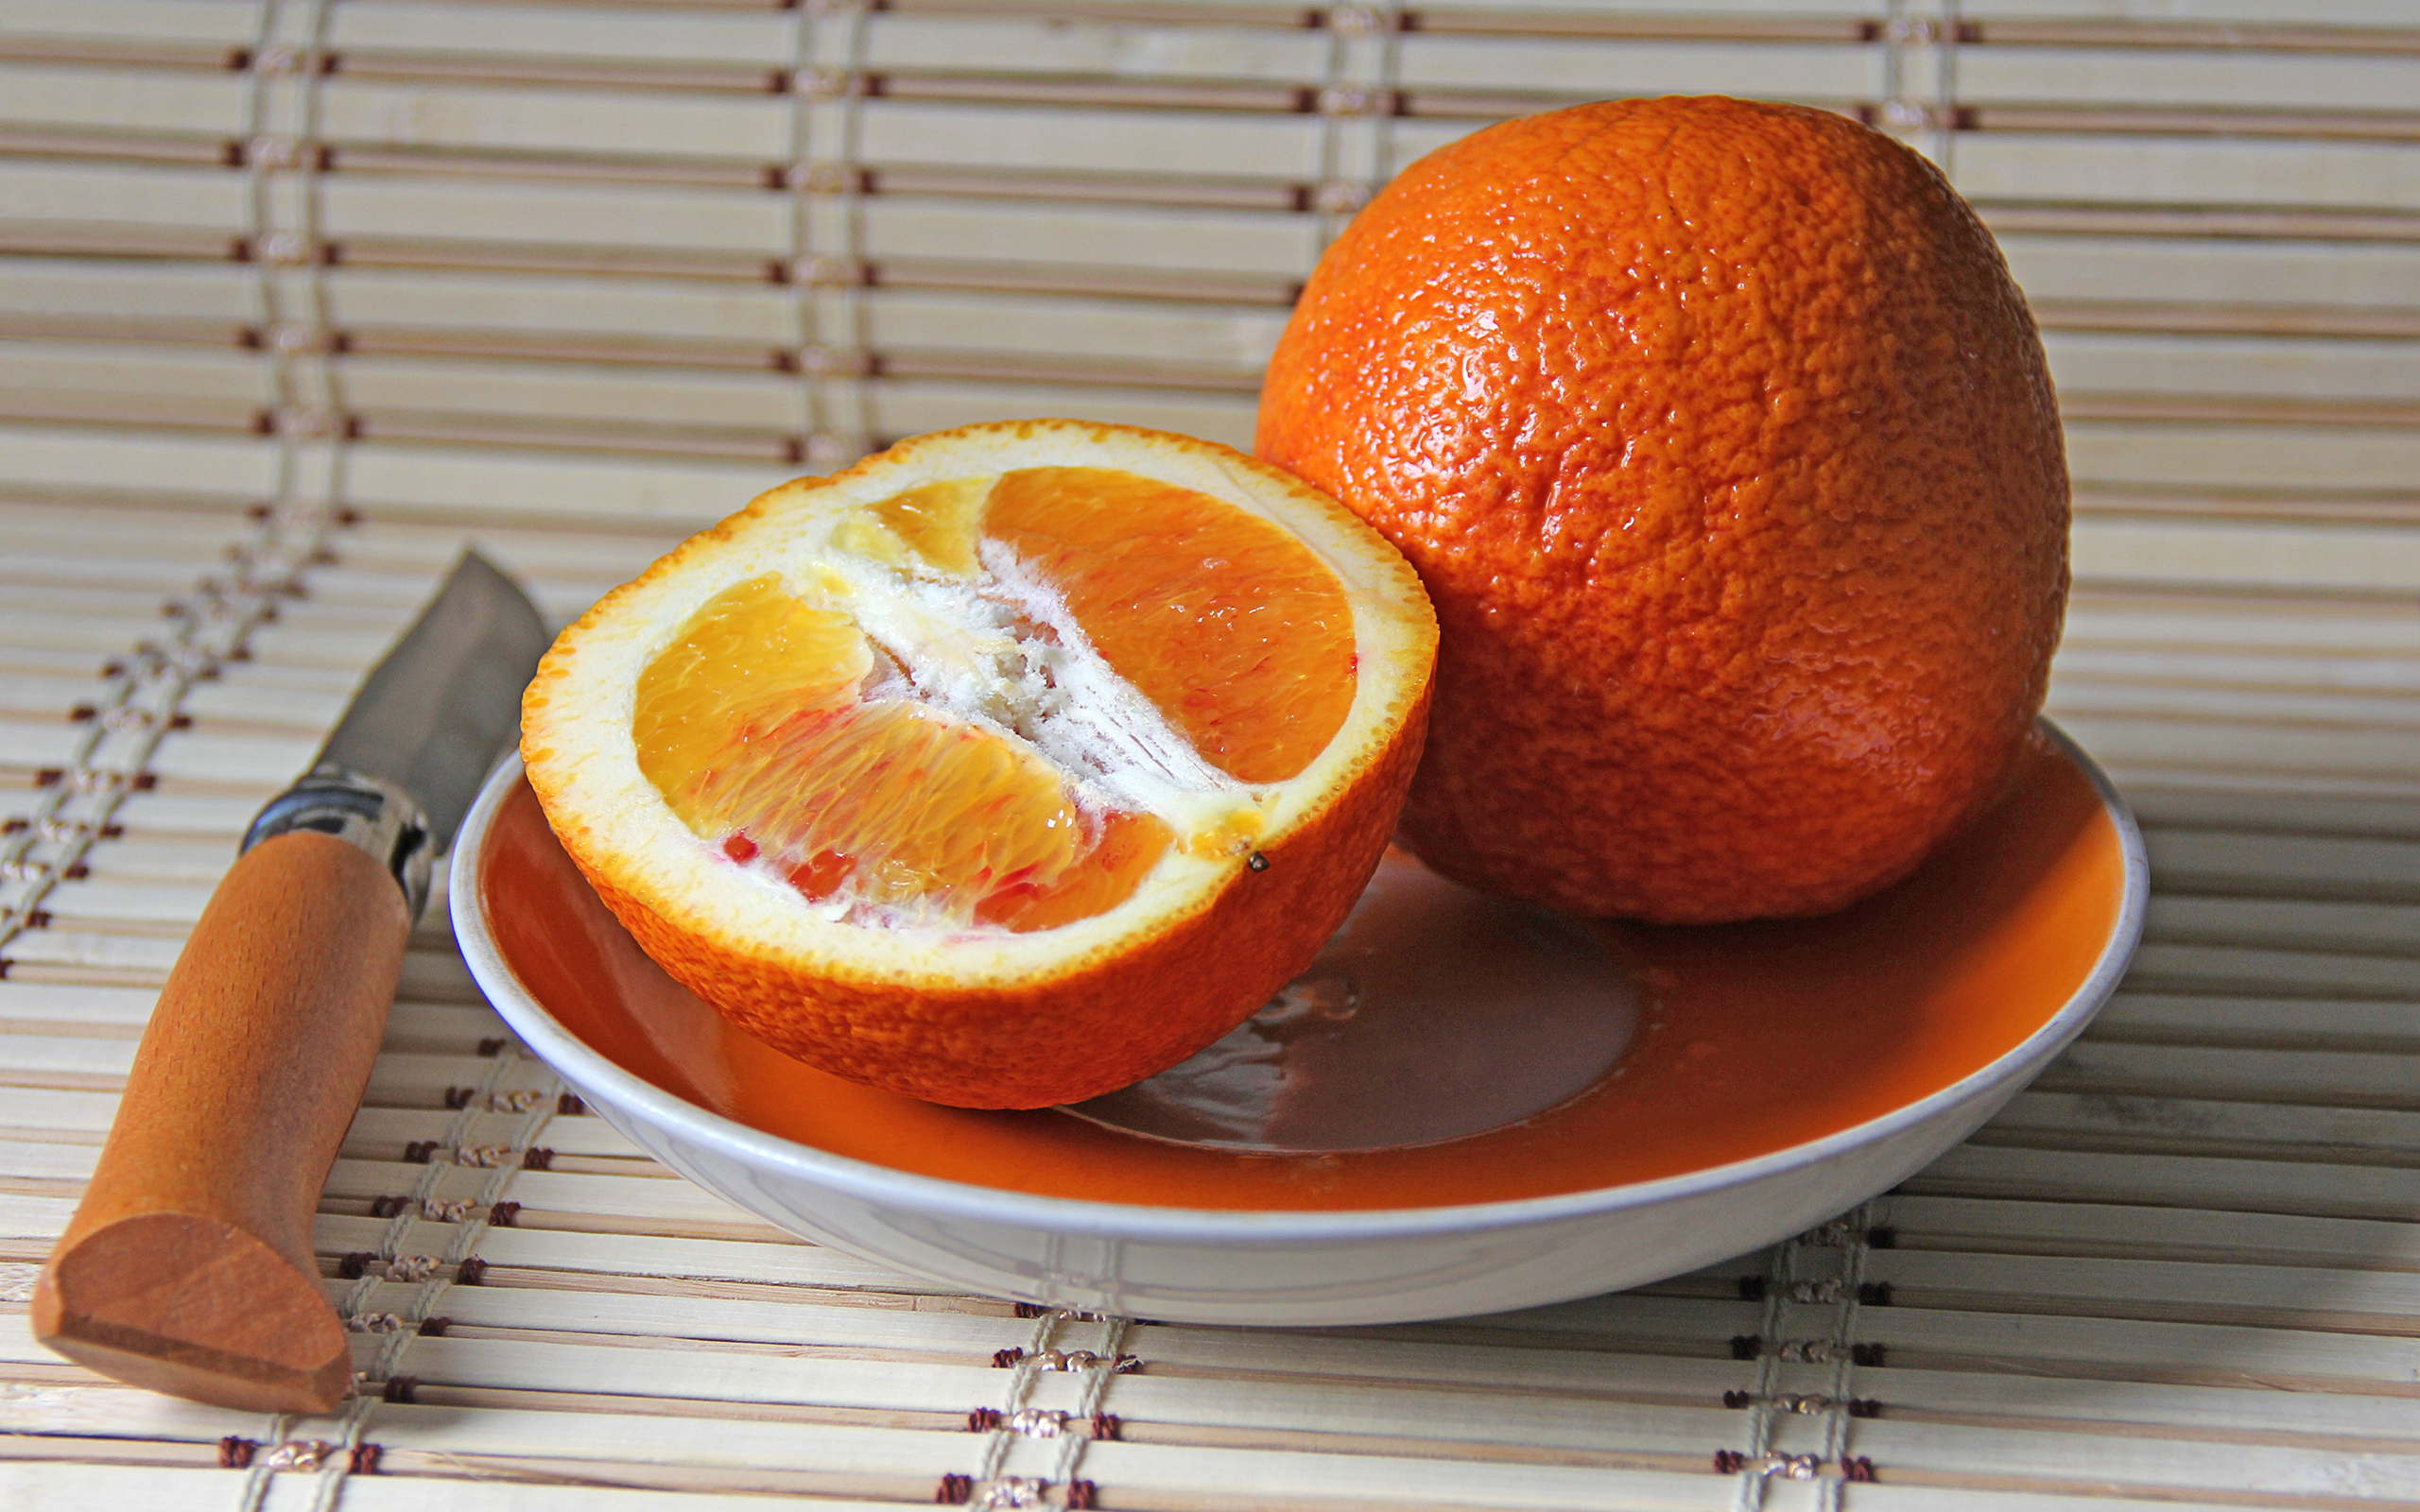 Мандарины на тарелке. Померанец оранж. Цитрус мандарин +апельсин. Тарелка "апельсин". Апельсины на столе.